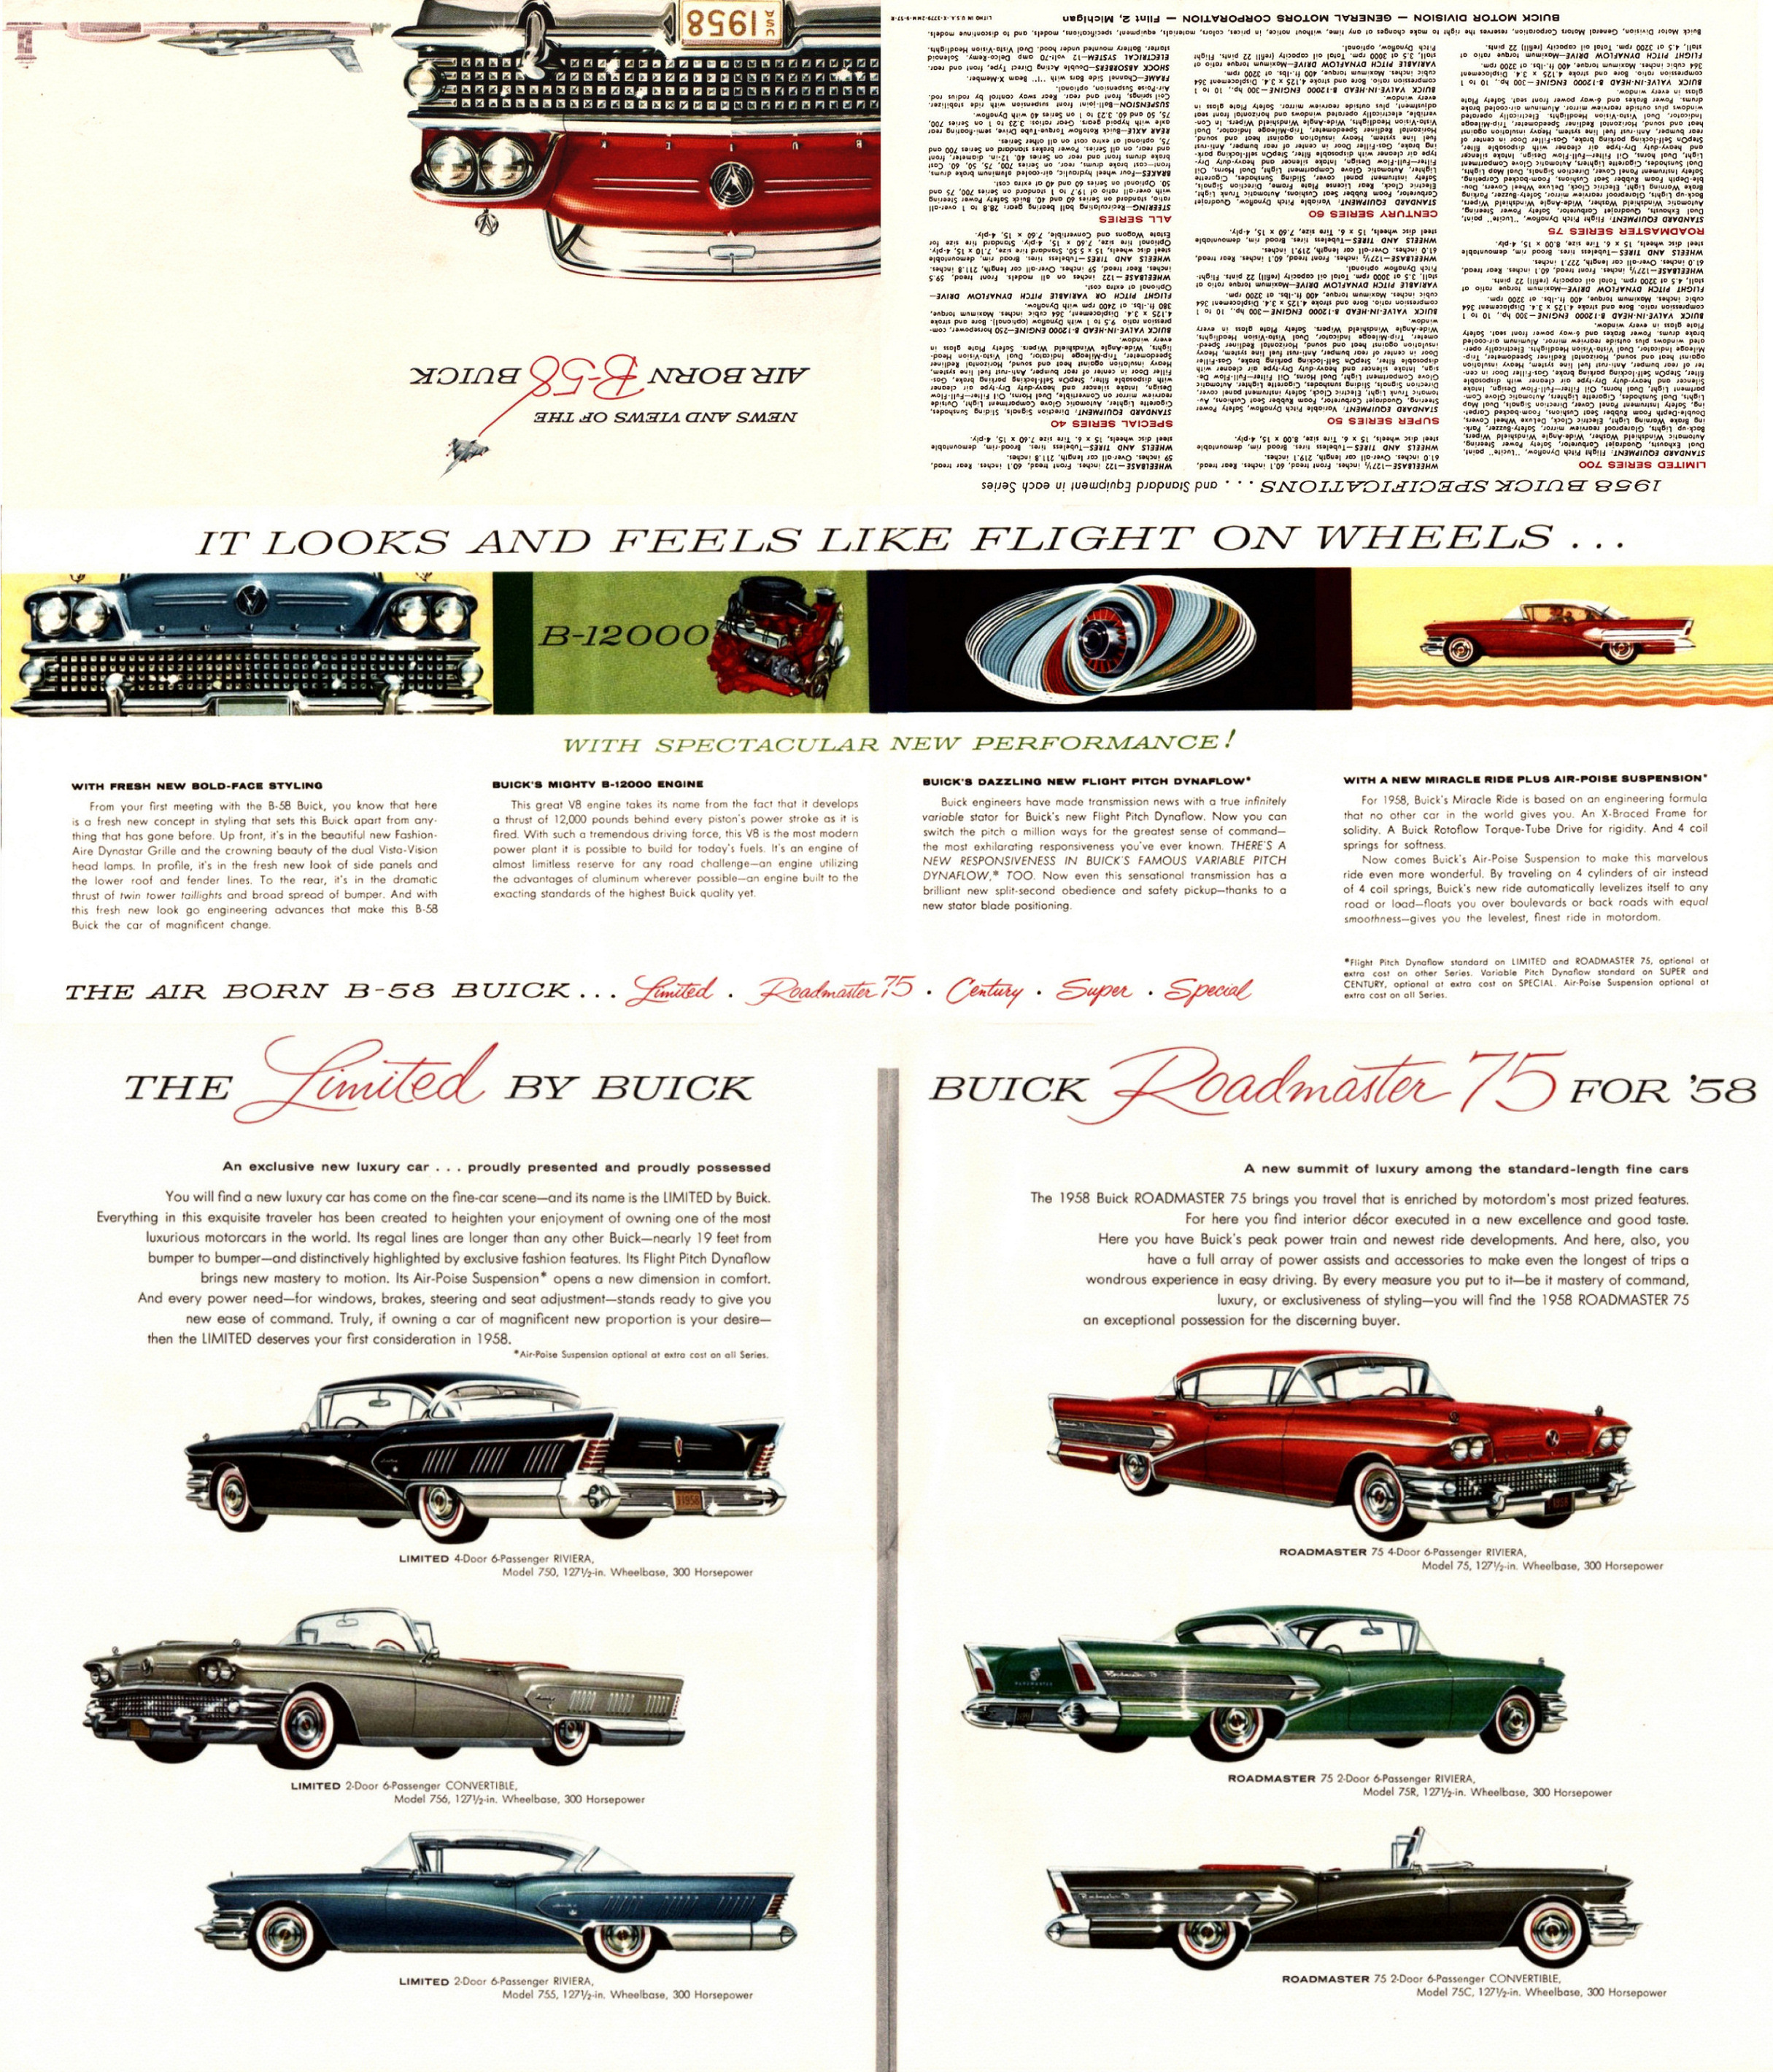 1958 Buiick Full Line Foldout Rev-Side A